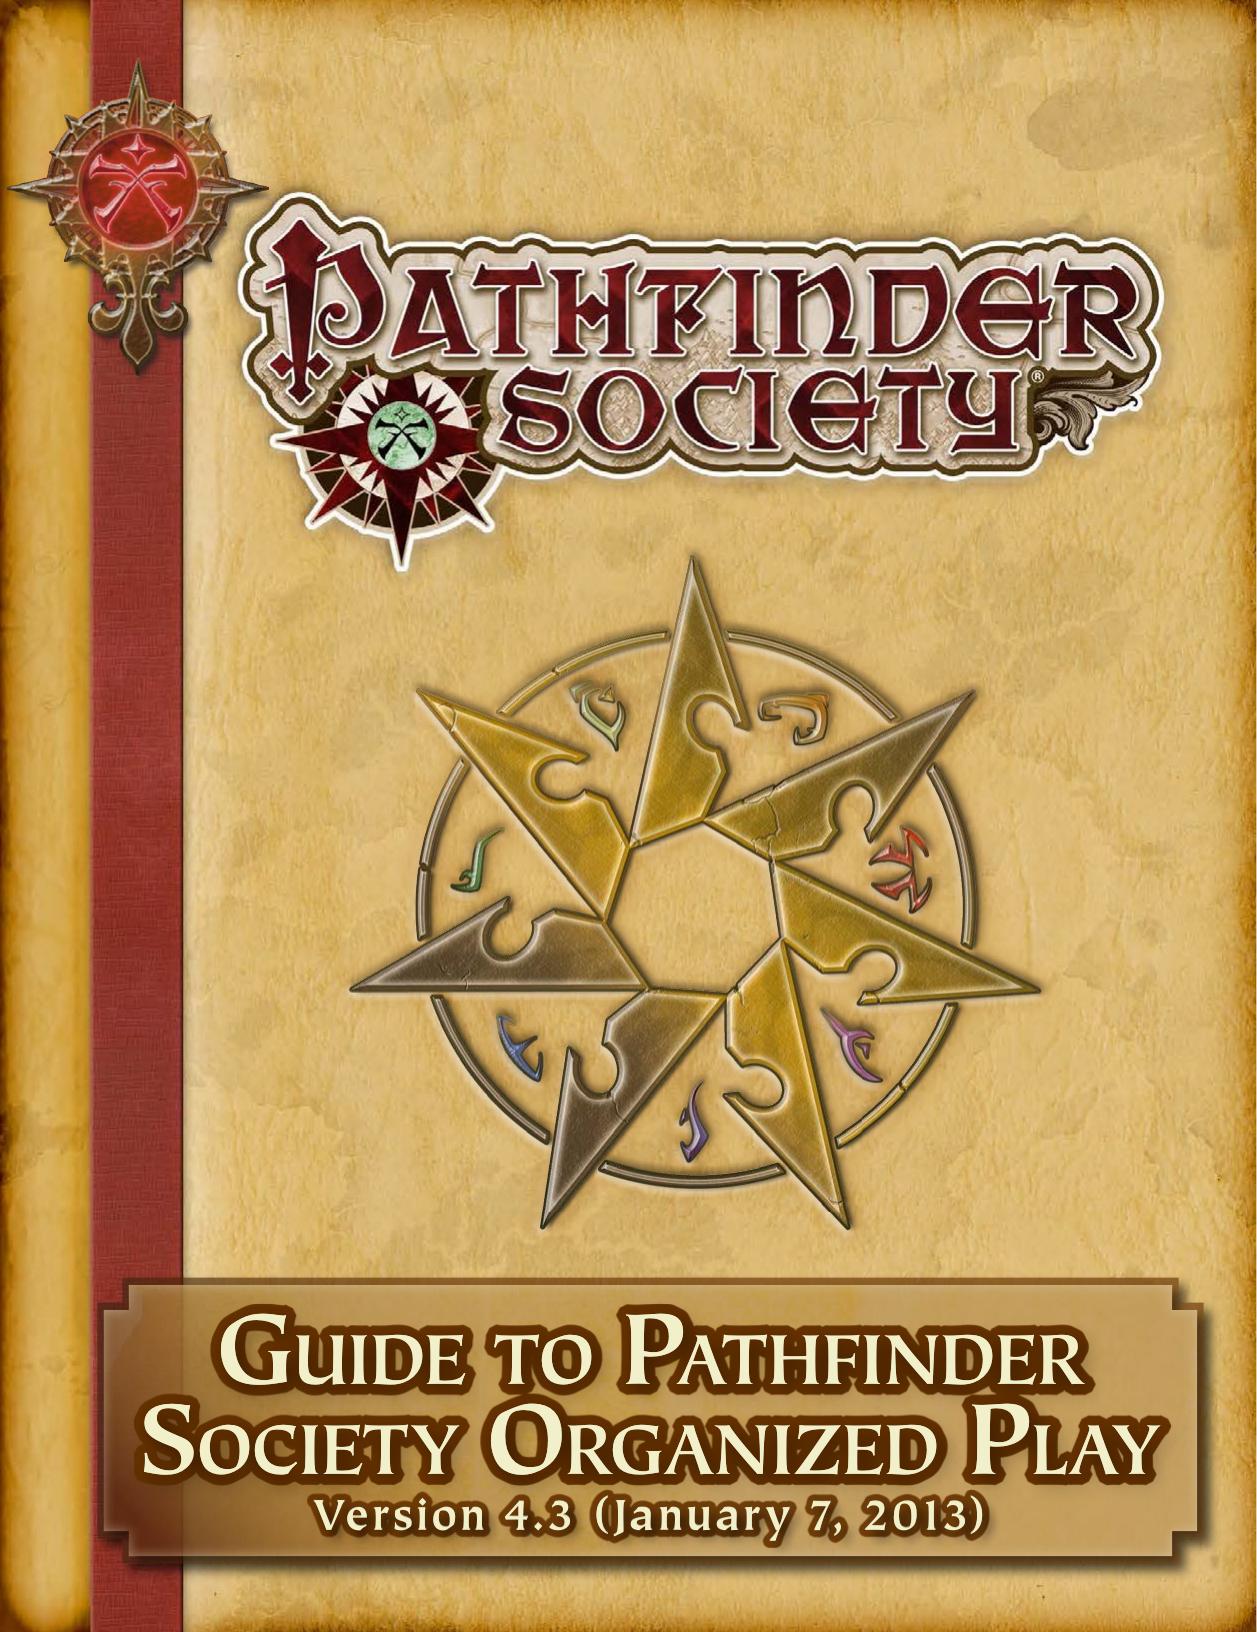 Guide to Pathfinder Society Organized Play (v4.3)